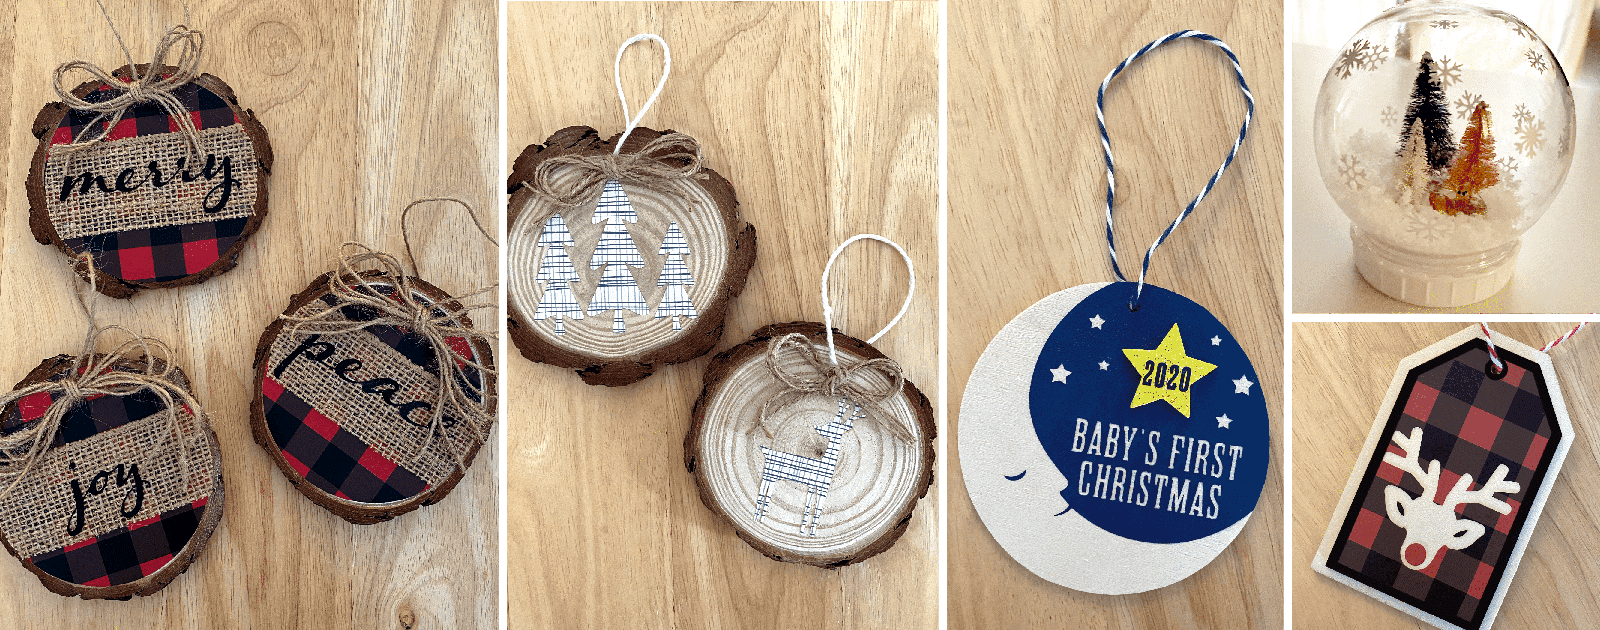 Christmas in July - DIY wood ornaments with Cricut + bonus snow globe